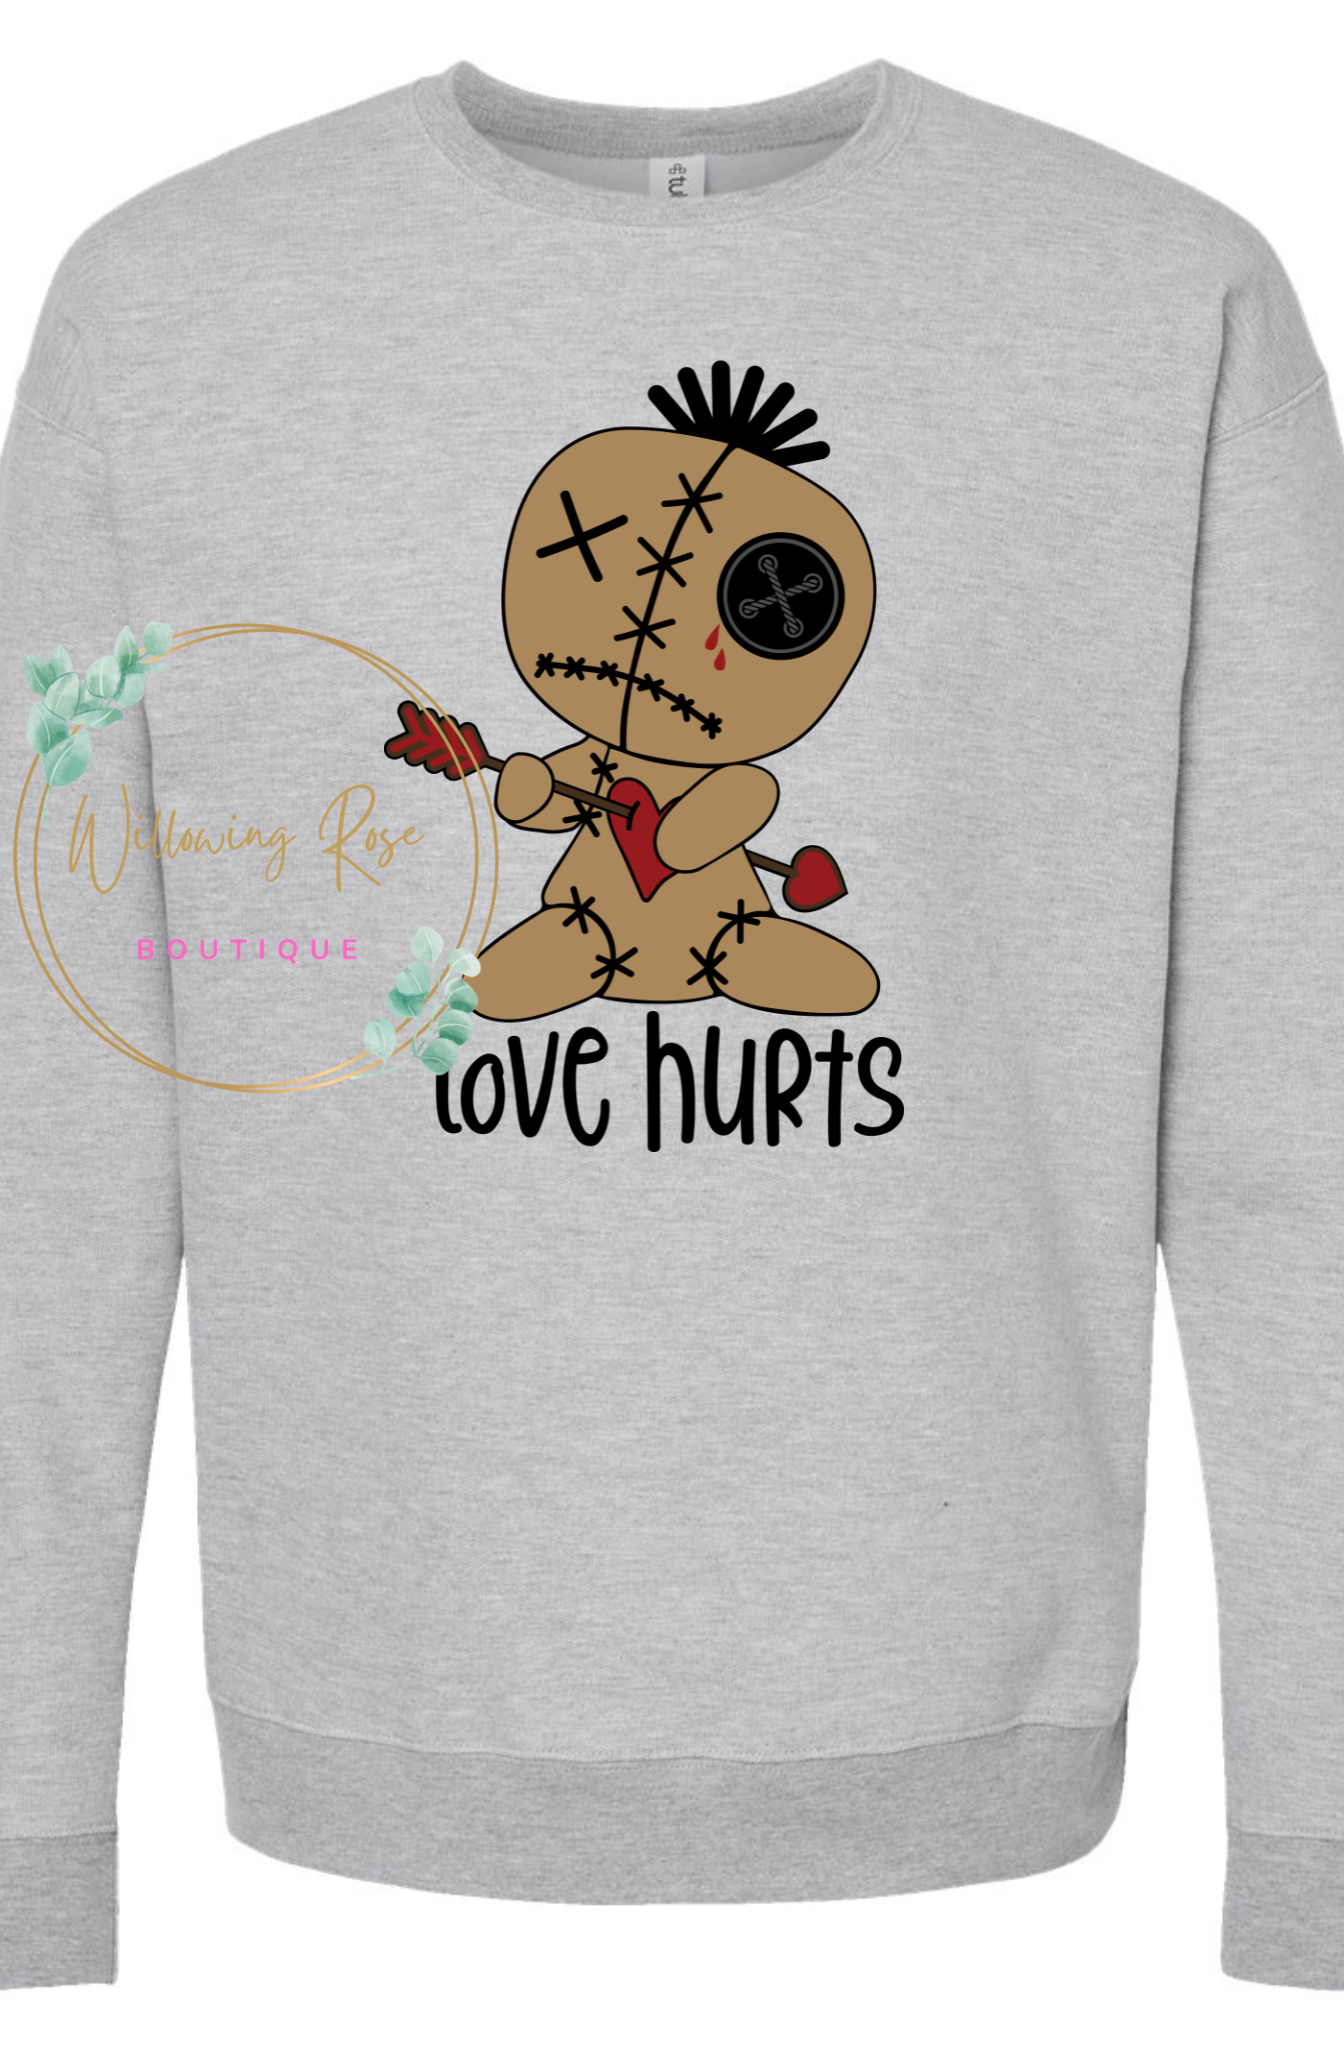 Love hurts sweatshirt- CUSTOM